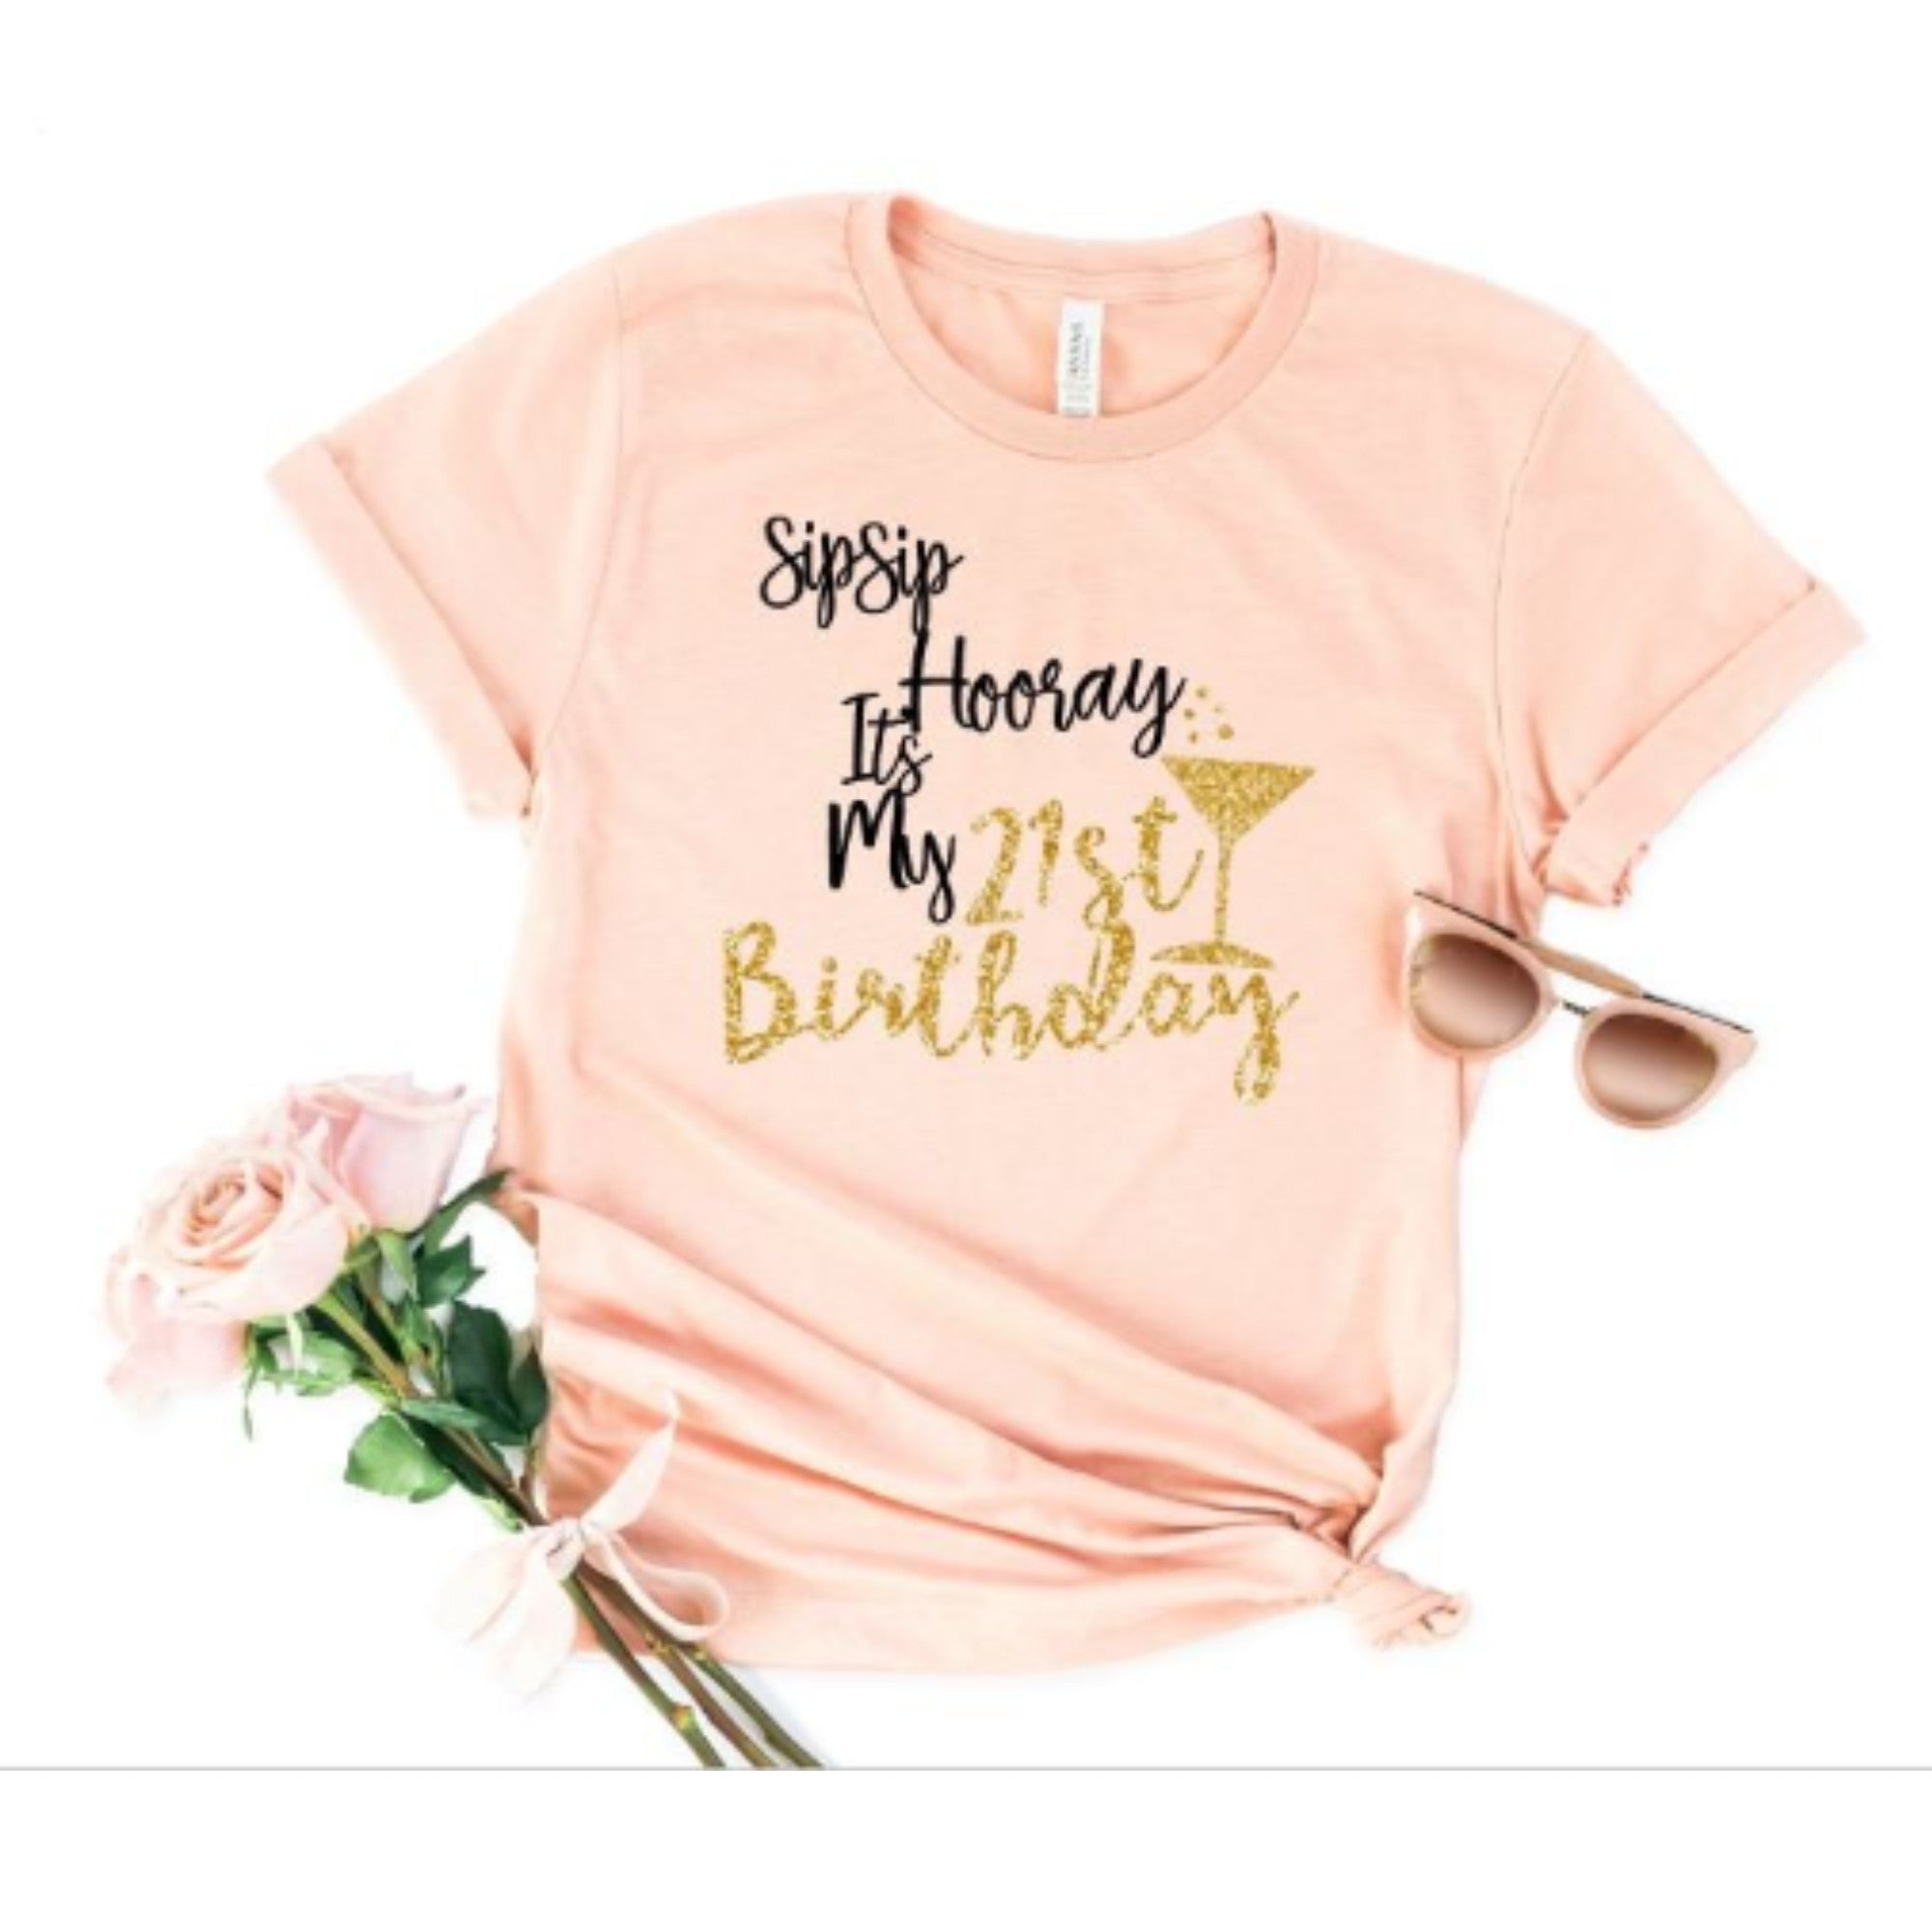 21st birthday celebration drinking shirt for women